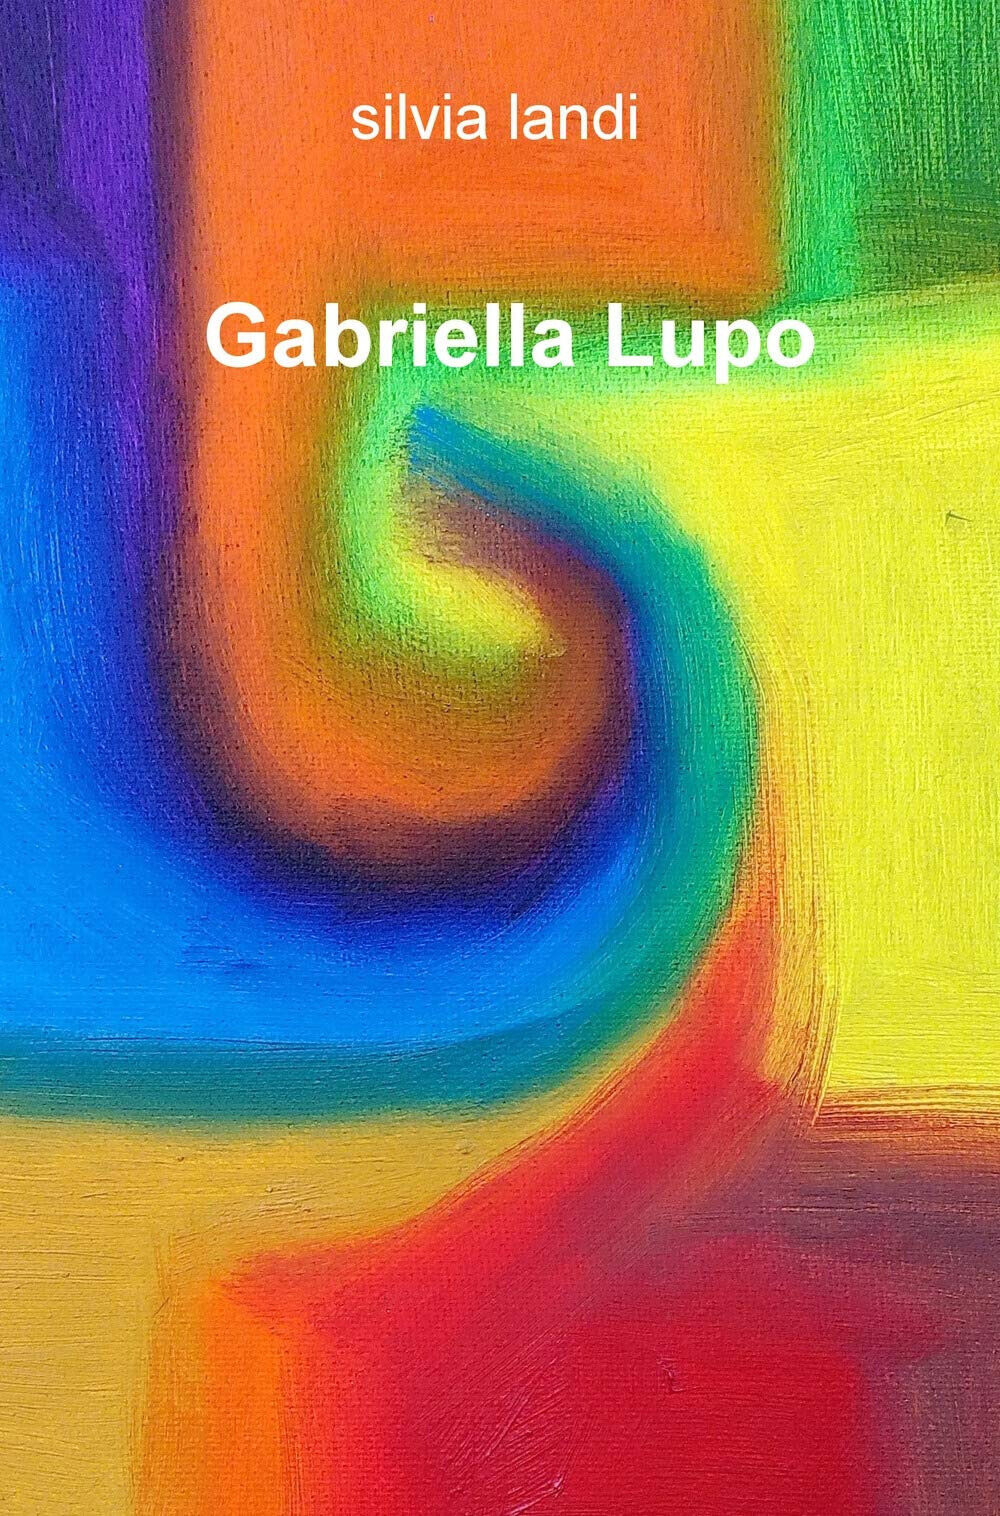 Gabriella Lupo. Ediz. illustrata - Silvia Landi - ilmiolibro, 2019 libro usato